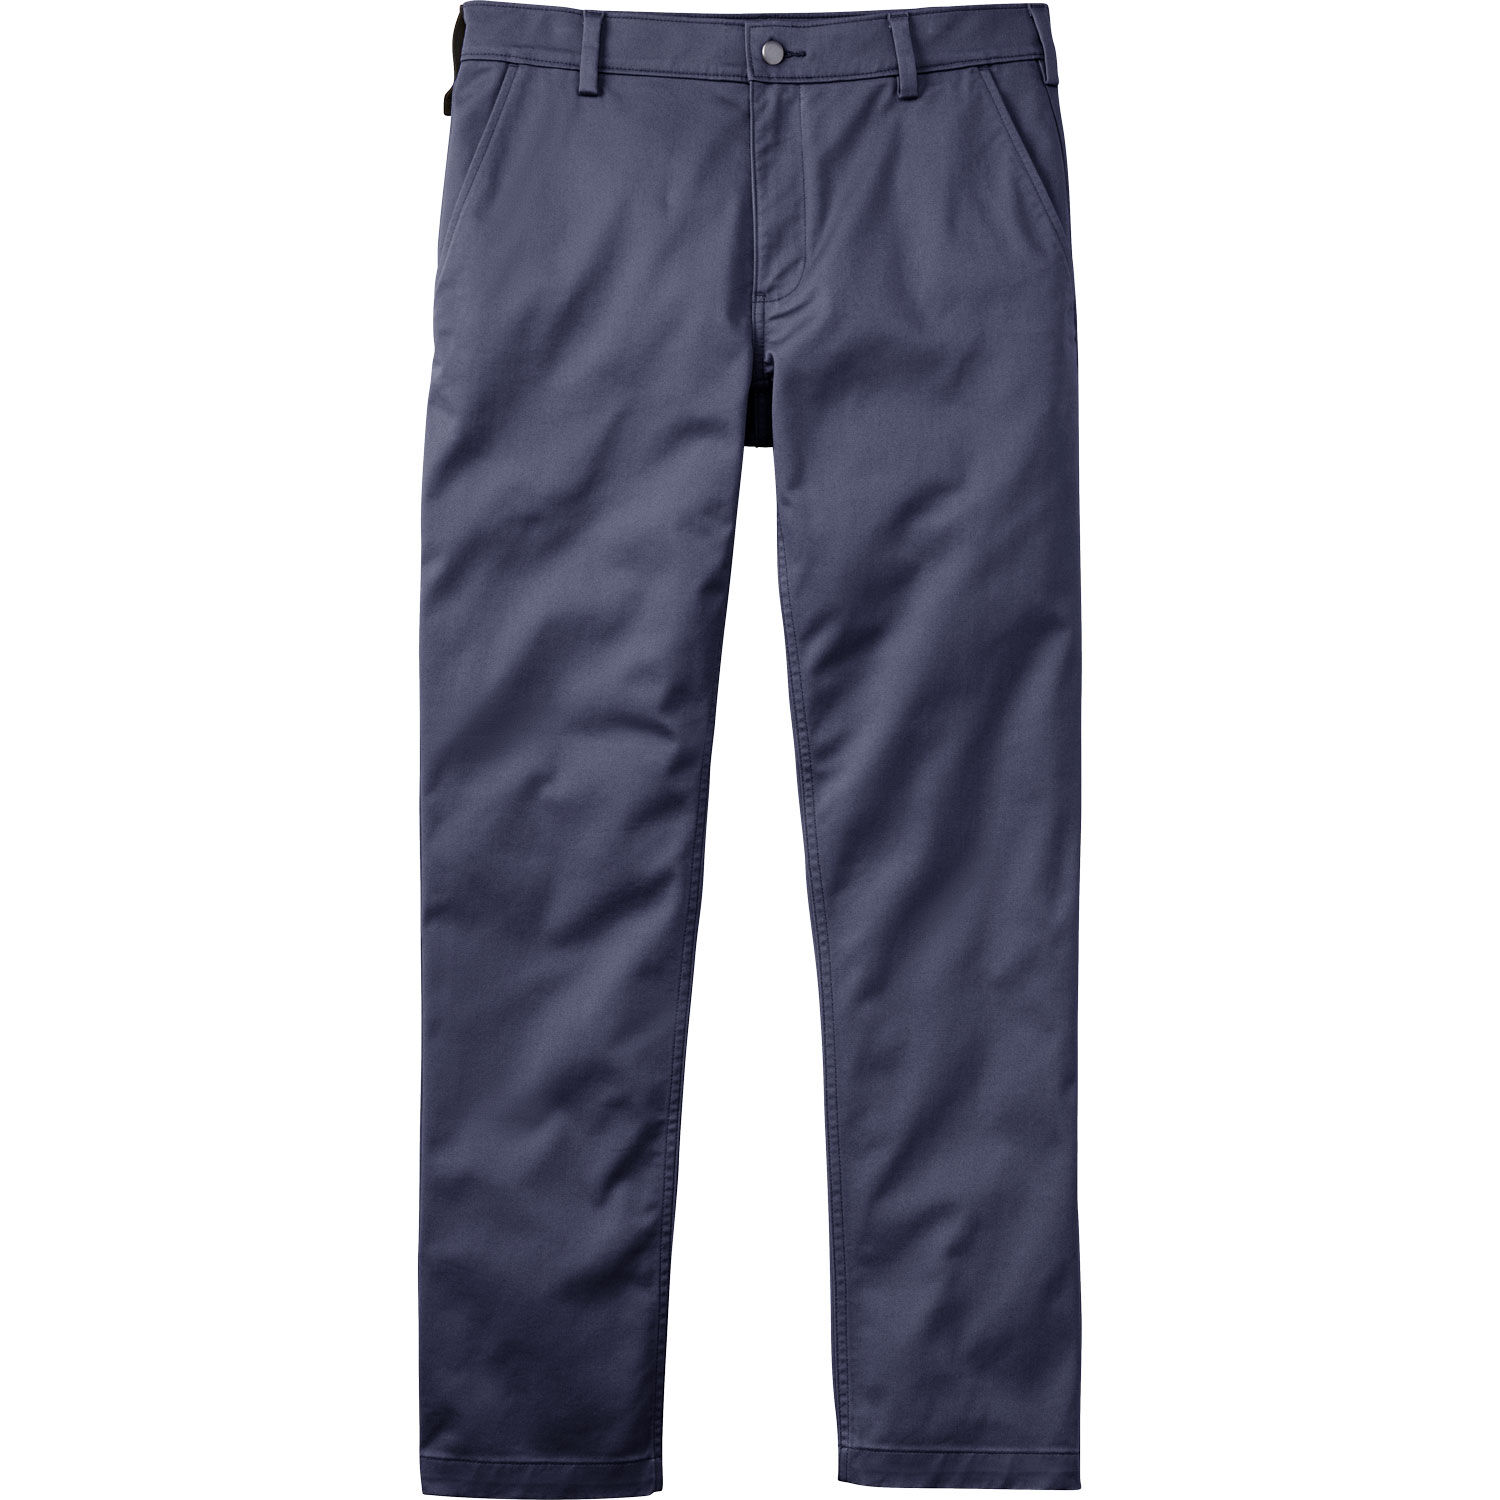 How to Wear Khaki Pants | Southern Tide